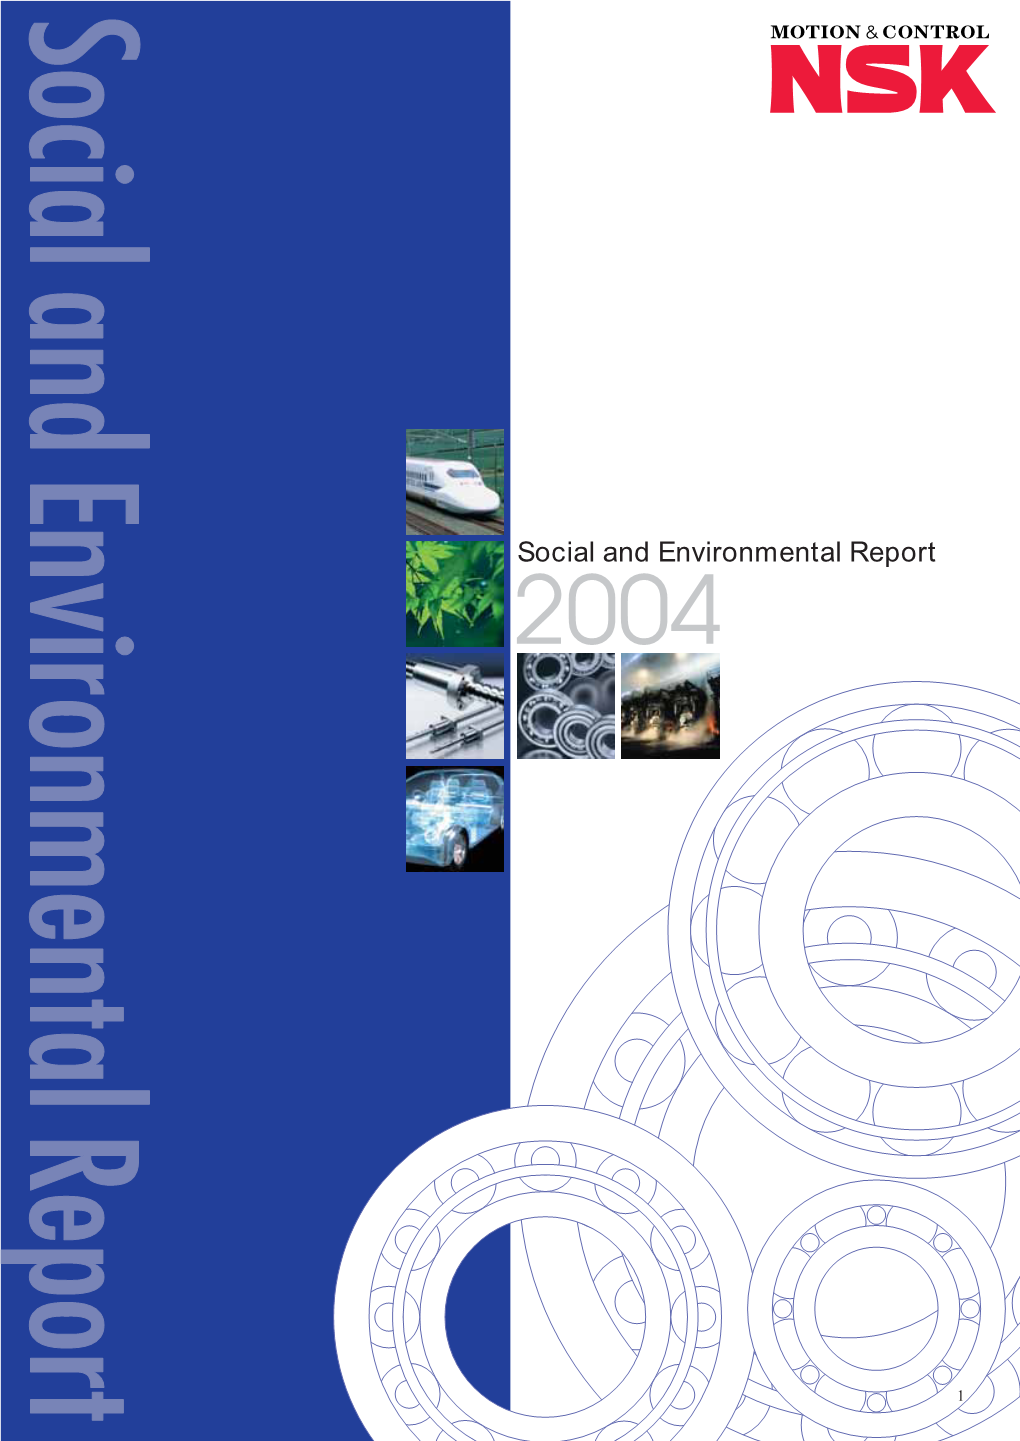 Social and Environmental Report 2004 [3.79MB]